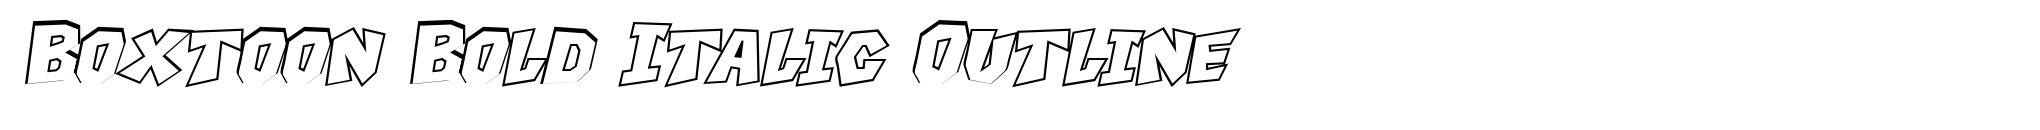 Boxtoon Bold Italic Outline image